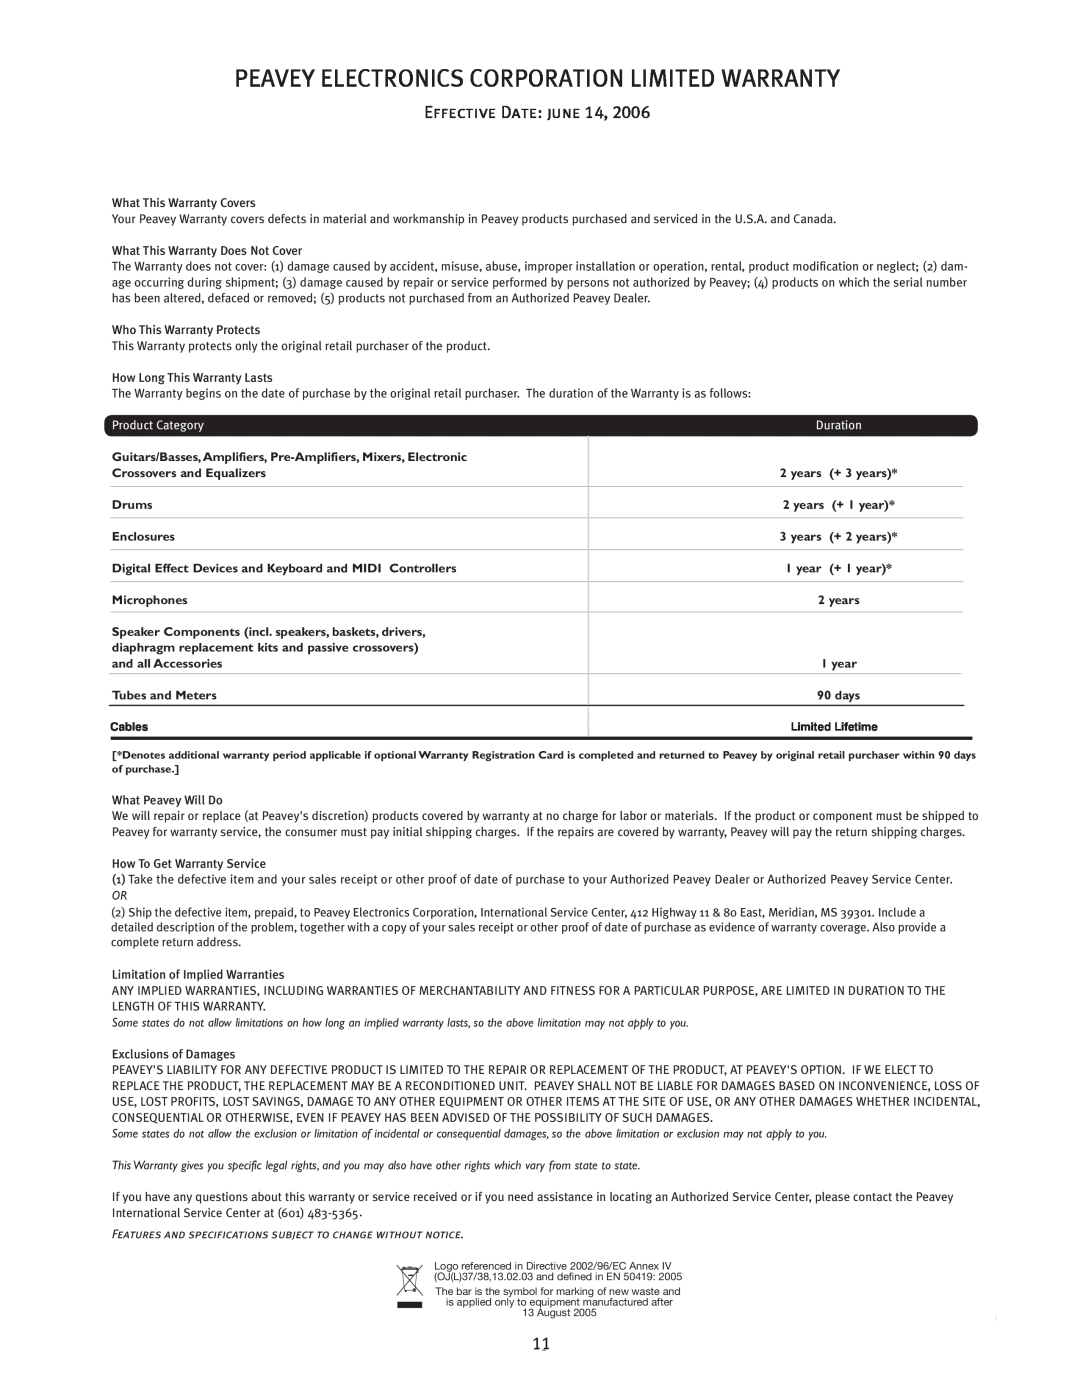 Peavey JSX Mini Colossal manual Peavey Electronics Corporation Limited Warranty, Effective Date June, 1SPEVDU$BUFHPSZ 